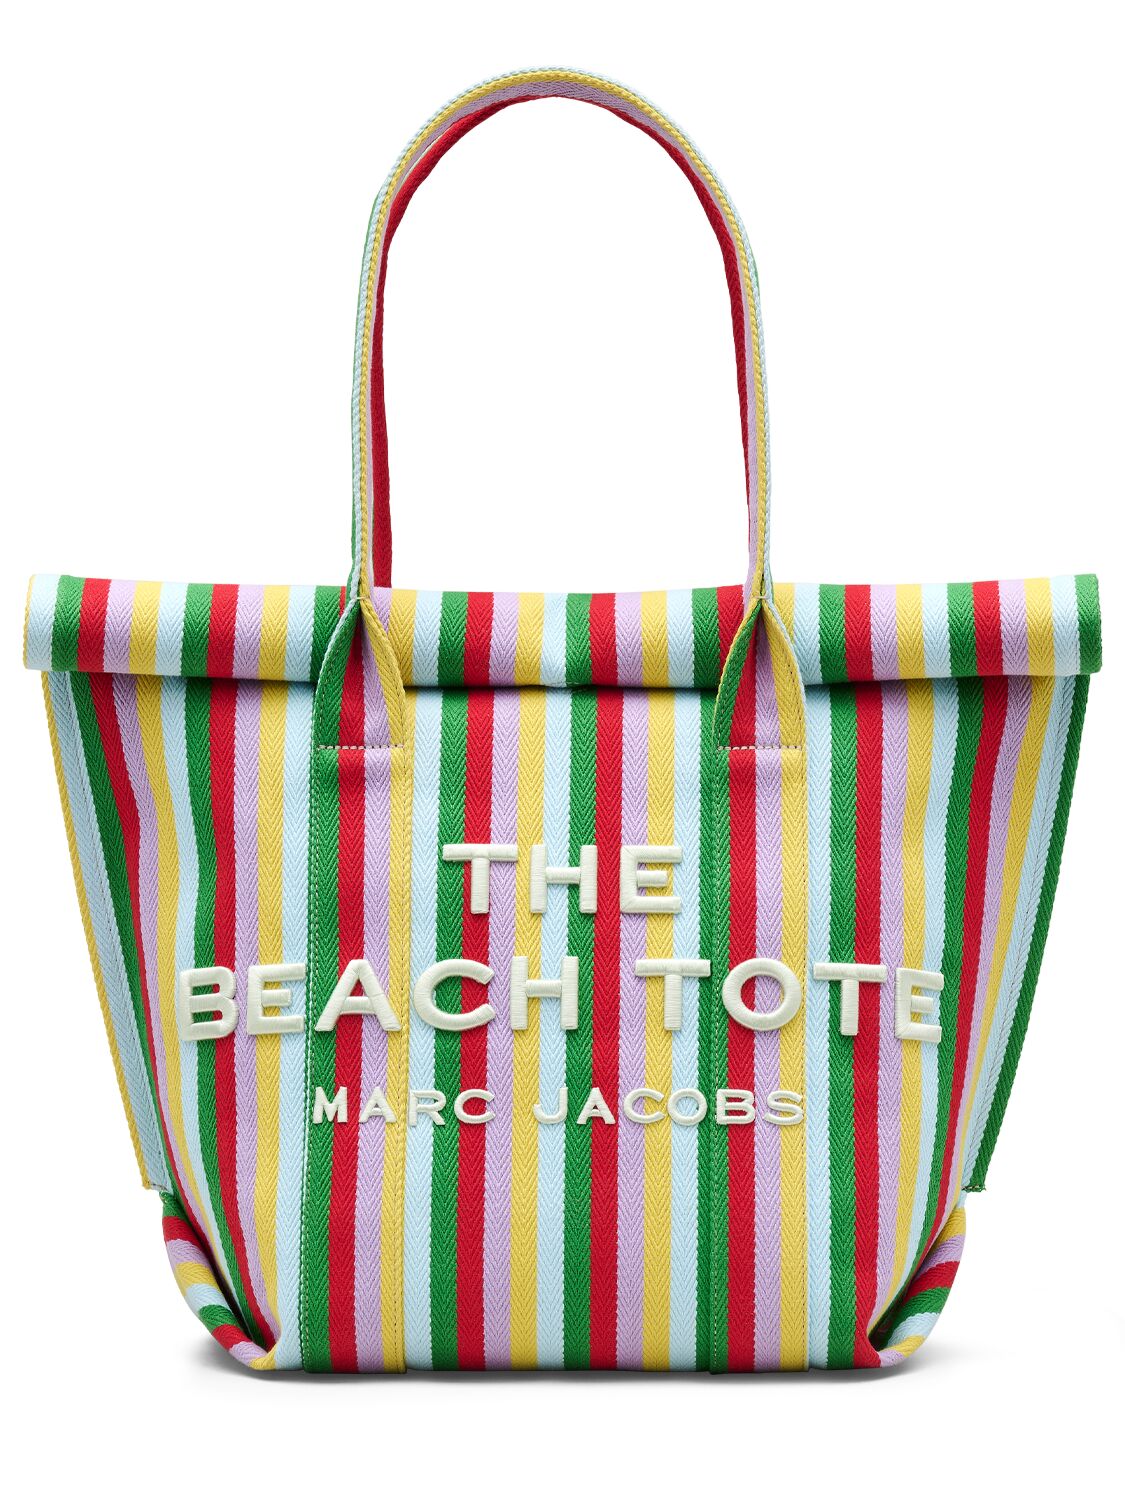 Marc Jacobs The Beach Tote Canvas Tote Bag In Wisteria/multi